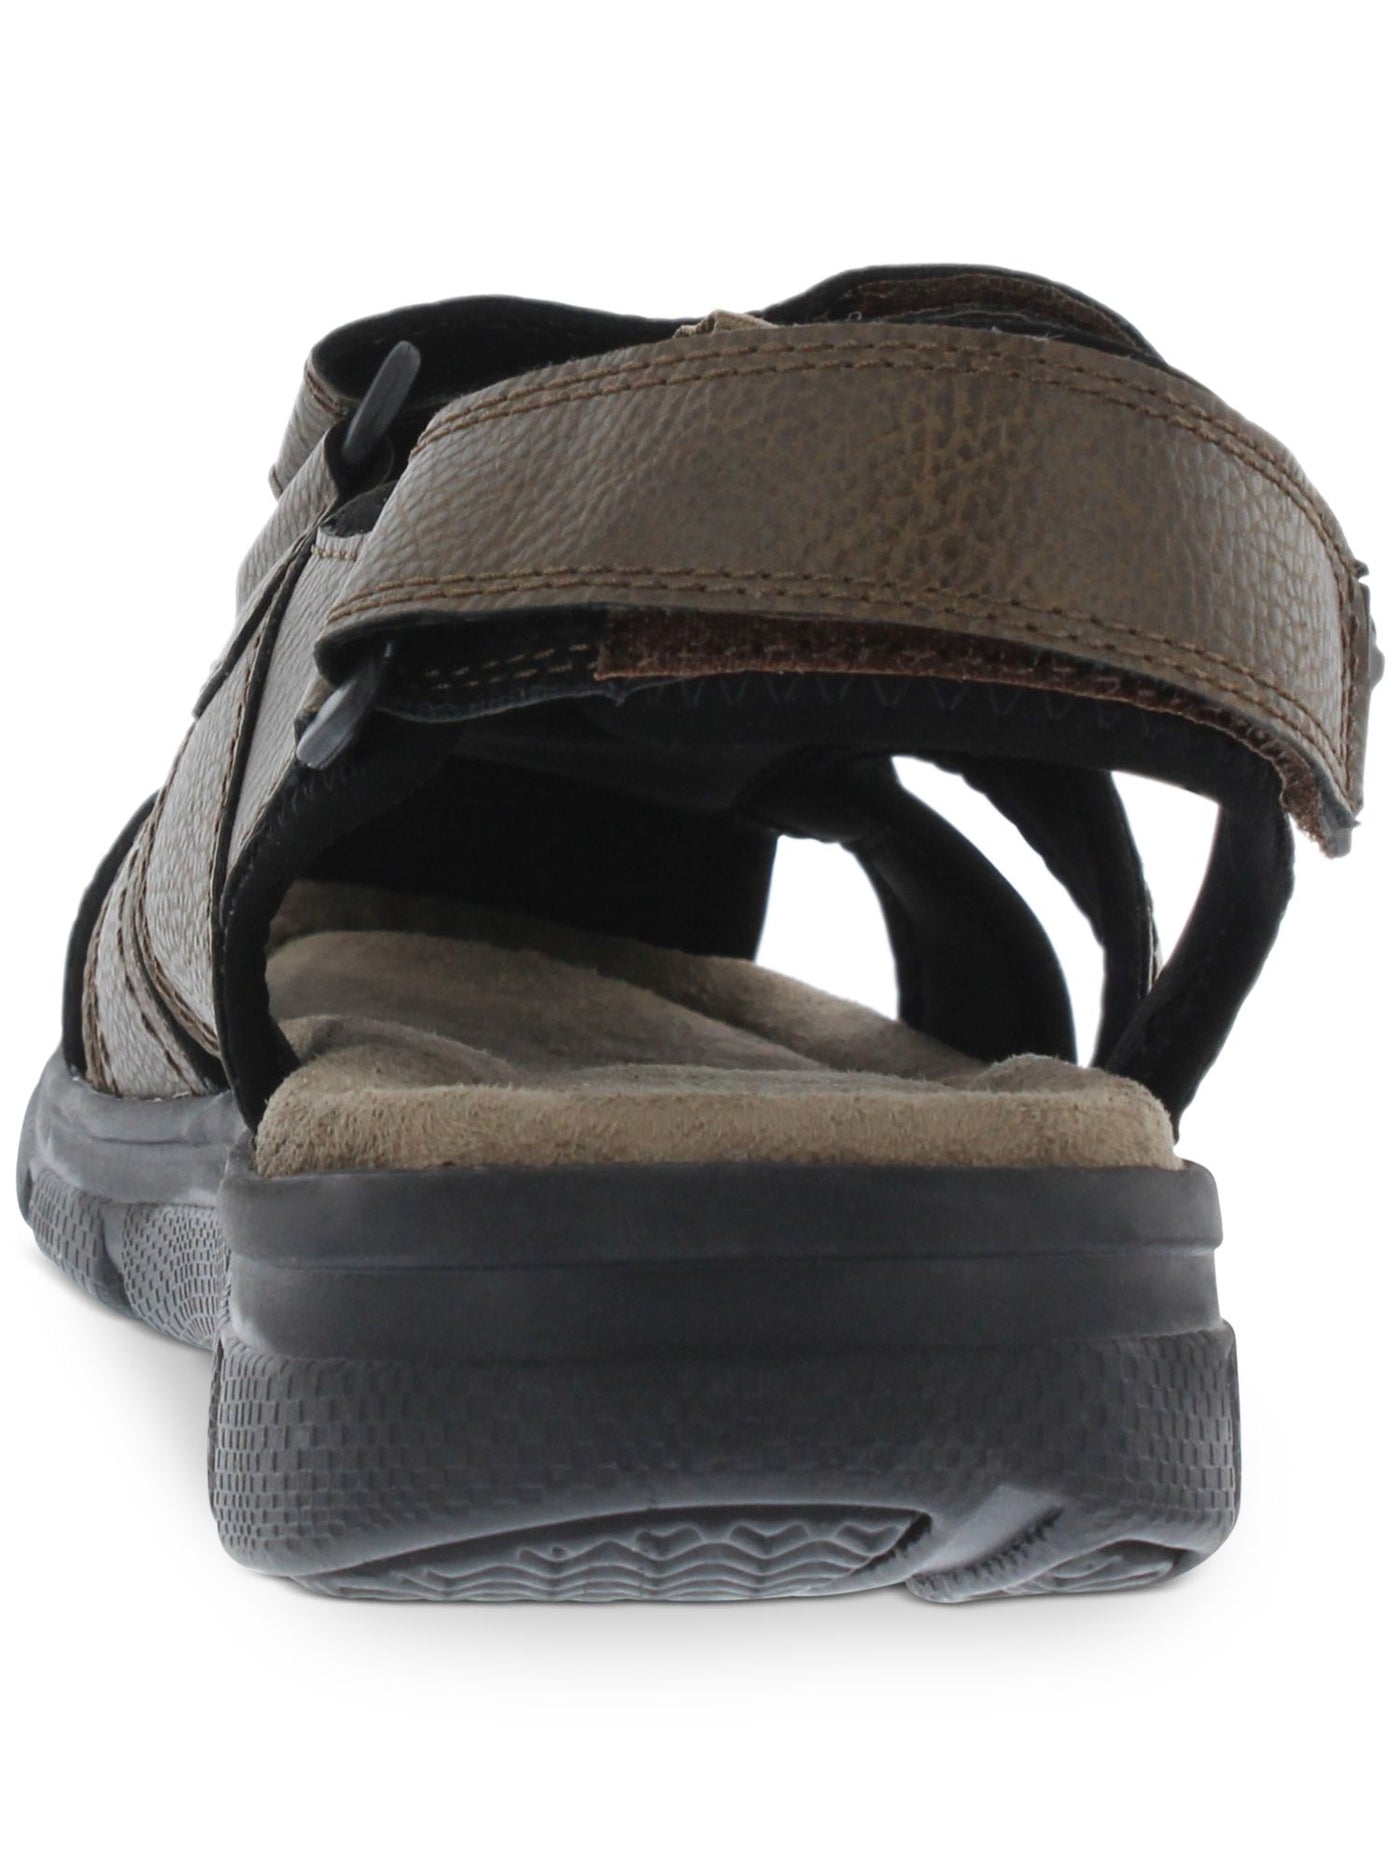 WEATHERPROOF VINTAGE Mens Brown Caged Cushioned Adjustable Cory Round Toe Platform Sandals Shoes 10 M